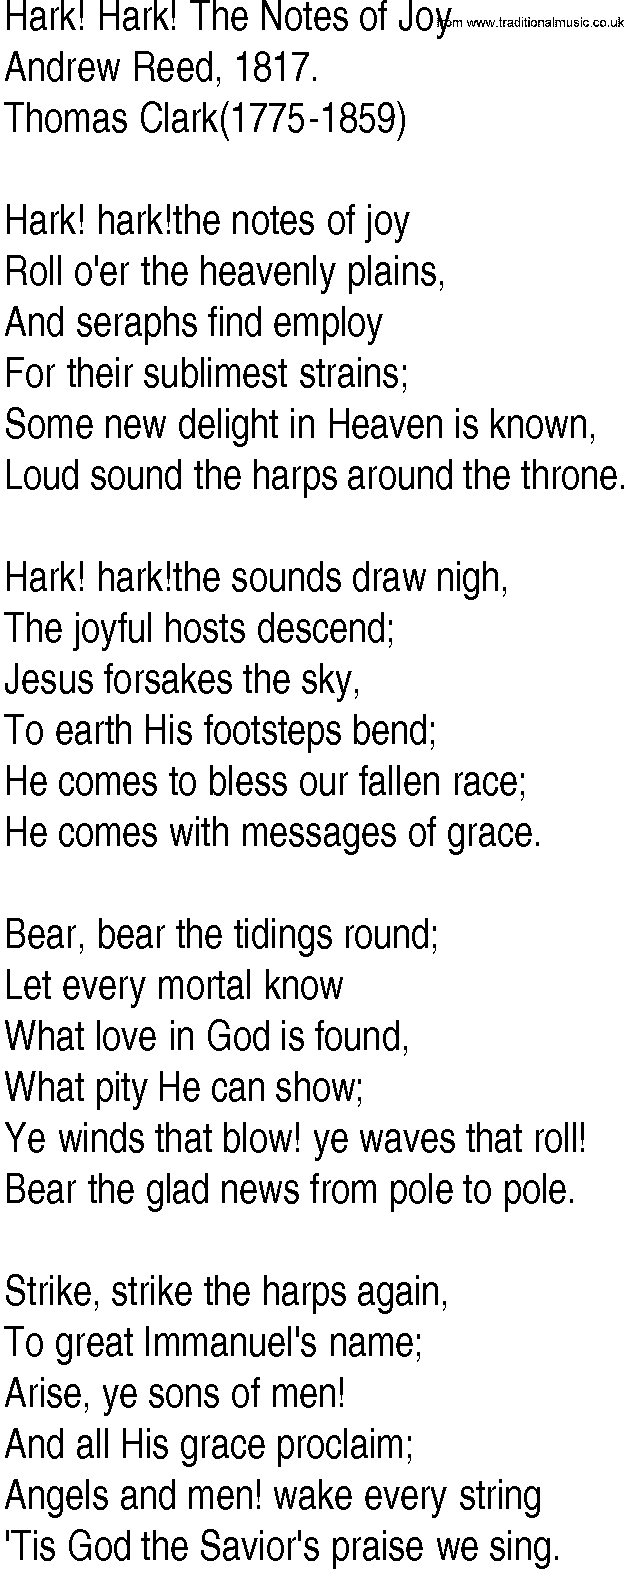 Hymn and Gospel Song: Hark! Hark! The Notes of Joy by Andrew Reed lyrics